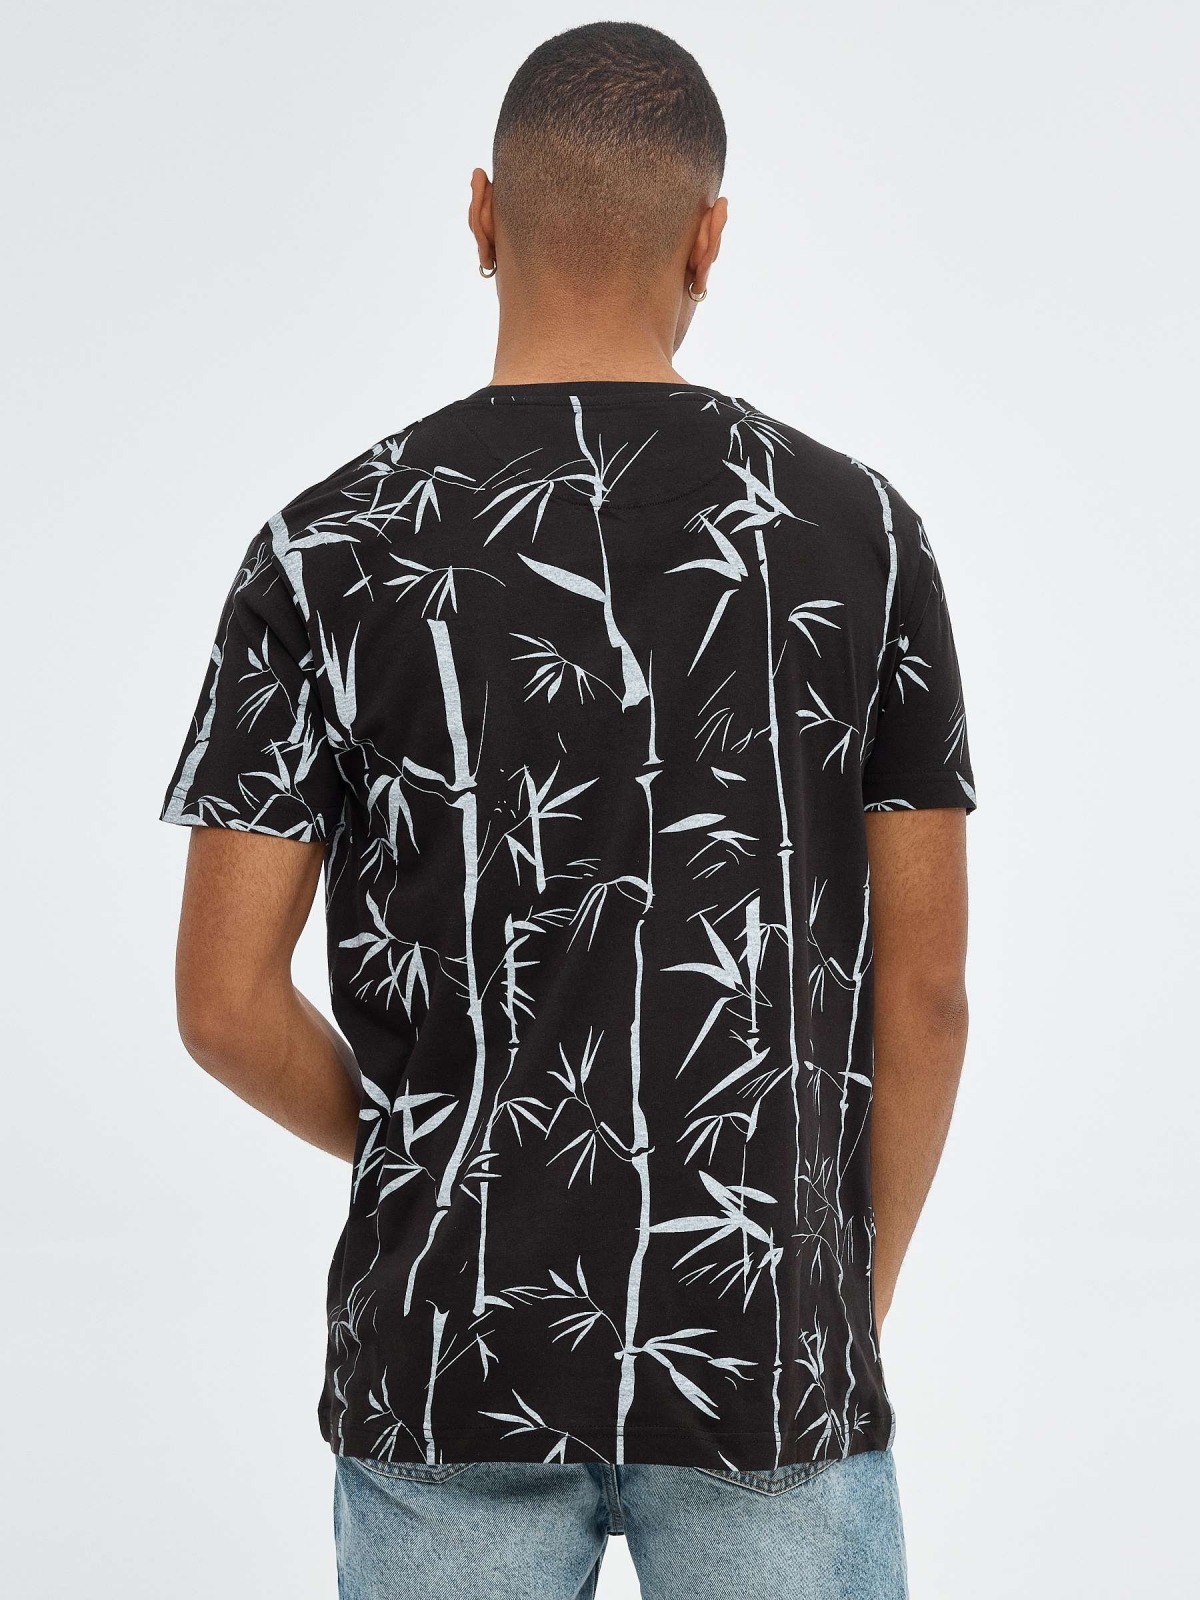 Camiseta de estampado de bambú negro vista media trasera